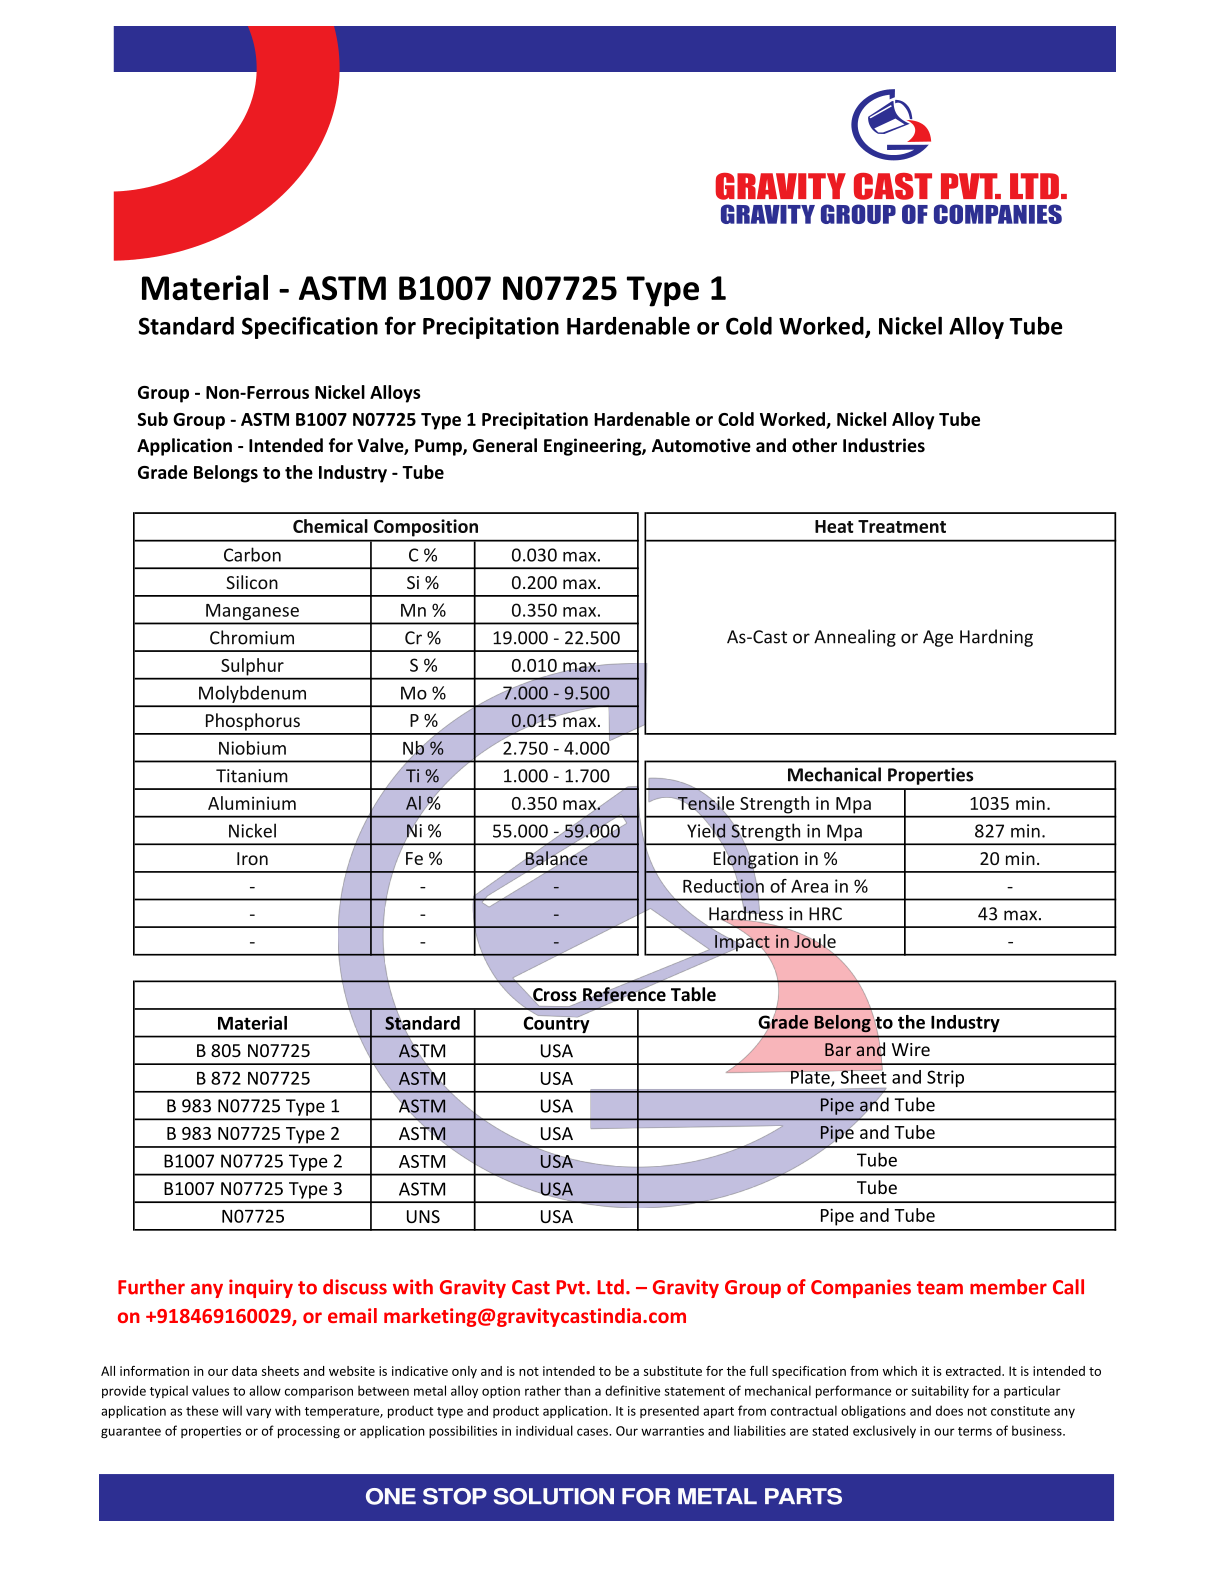 ASTM B1007 N07725 Type 1.pdf